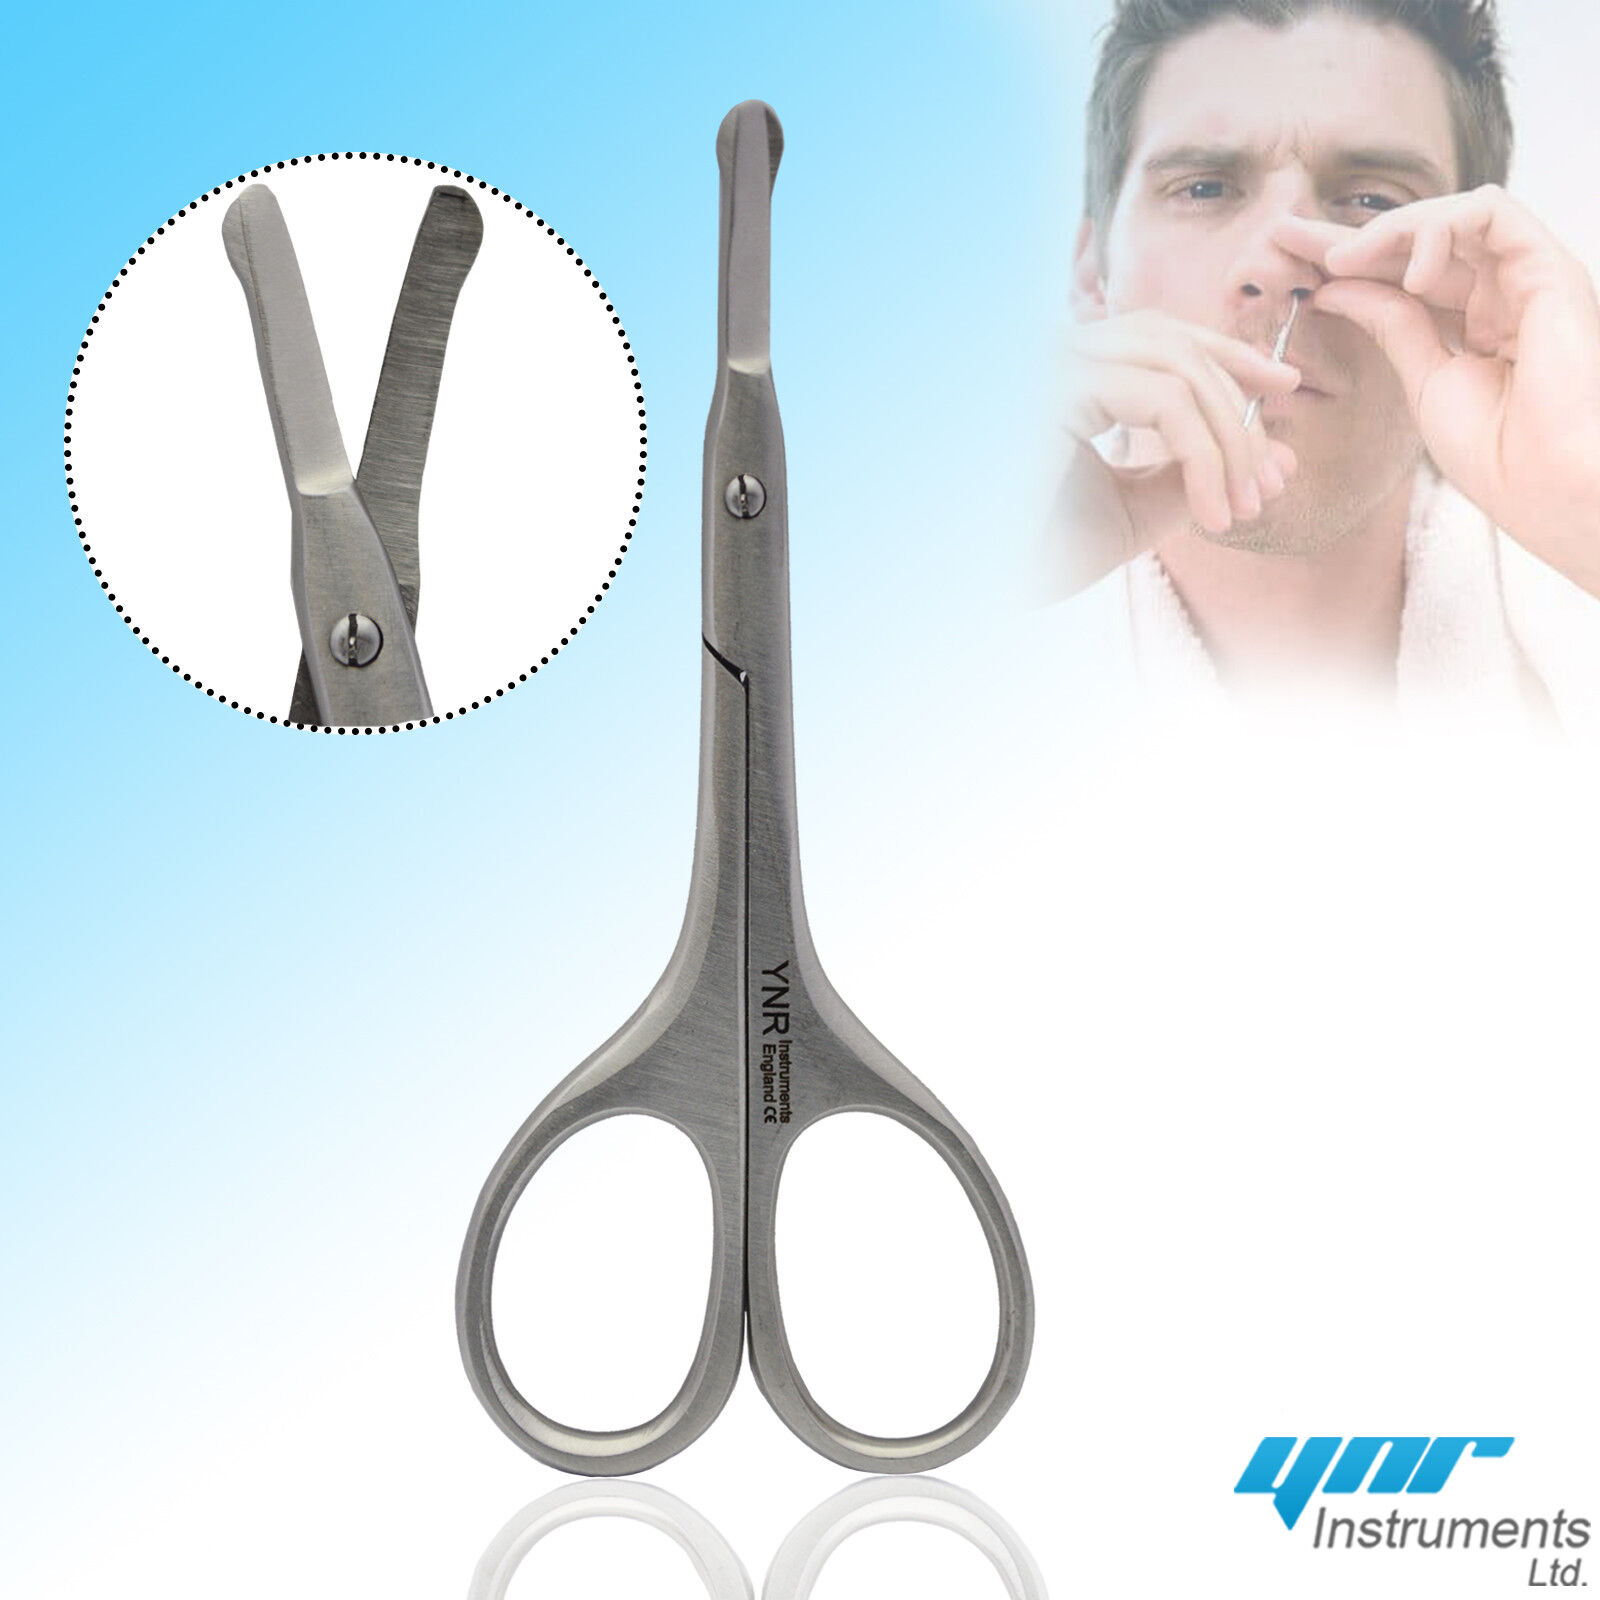 Nose Hair Trimming Scissors |Grooming Essentials| Mustache & Beard YNR  5056174602361 | eBay